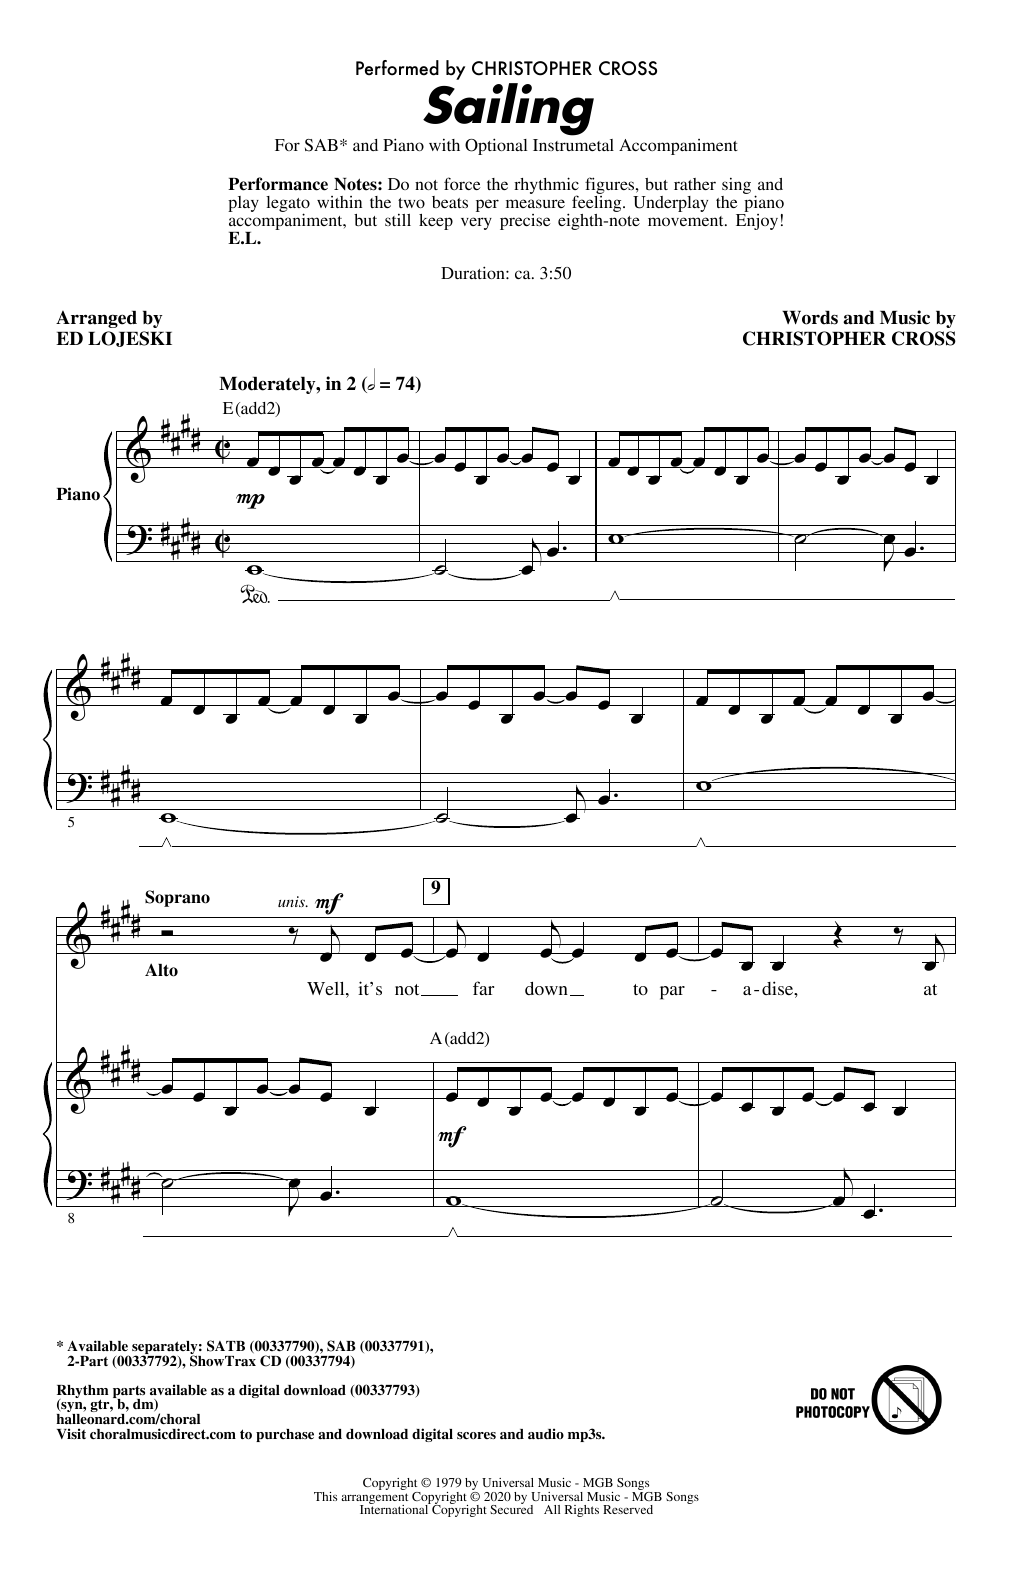 Christopher Cross Sailing (arr. Ed Lojeski) Sheet Music Notes & Chords for 2-Part Choir - Download or Print PDF